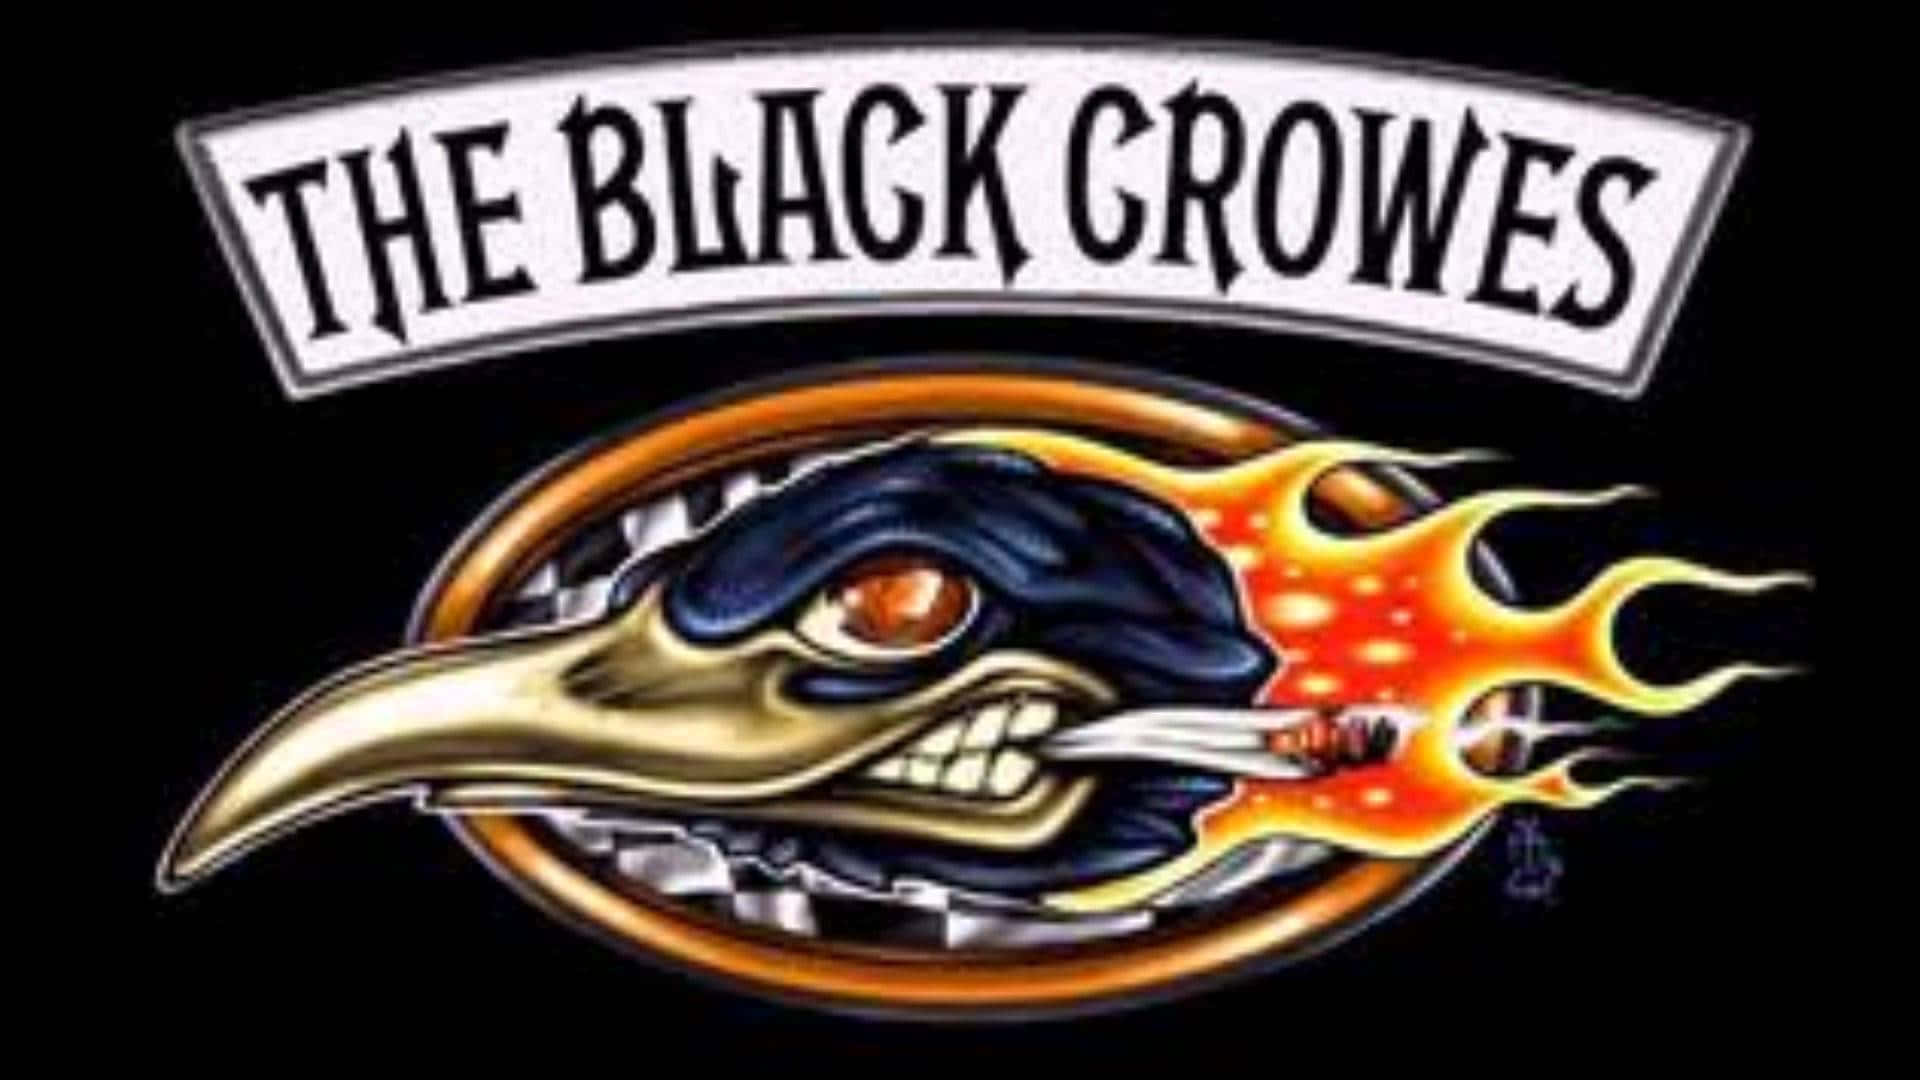 Legendary Rock Band Black Crowes Wallpaper